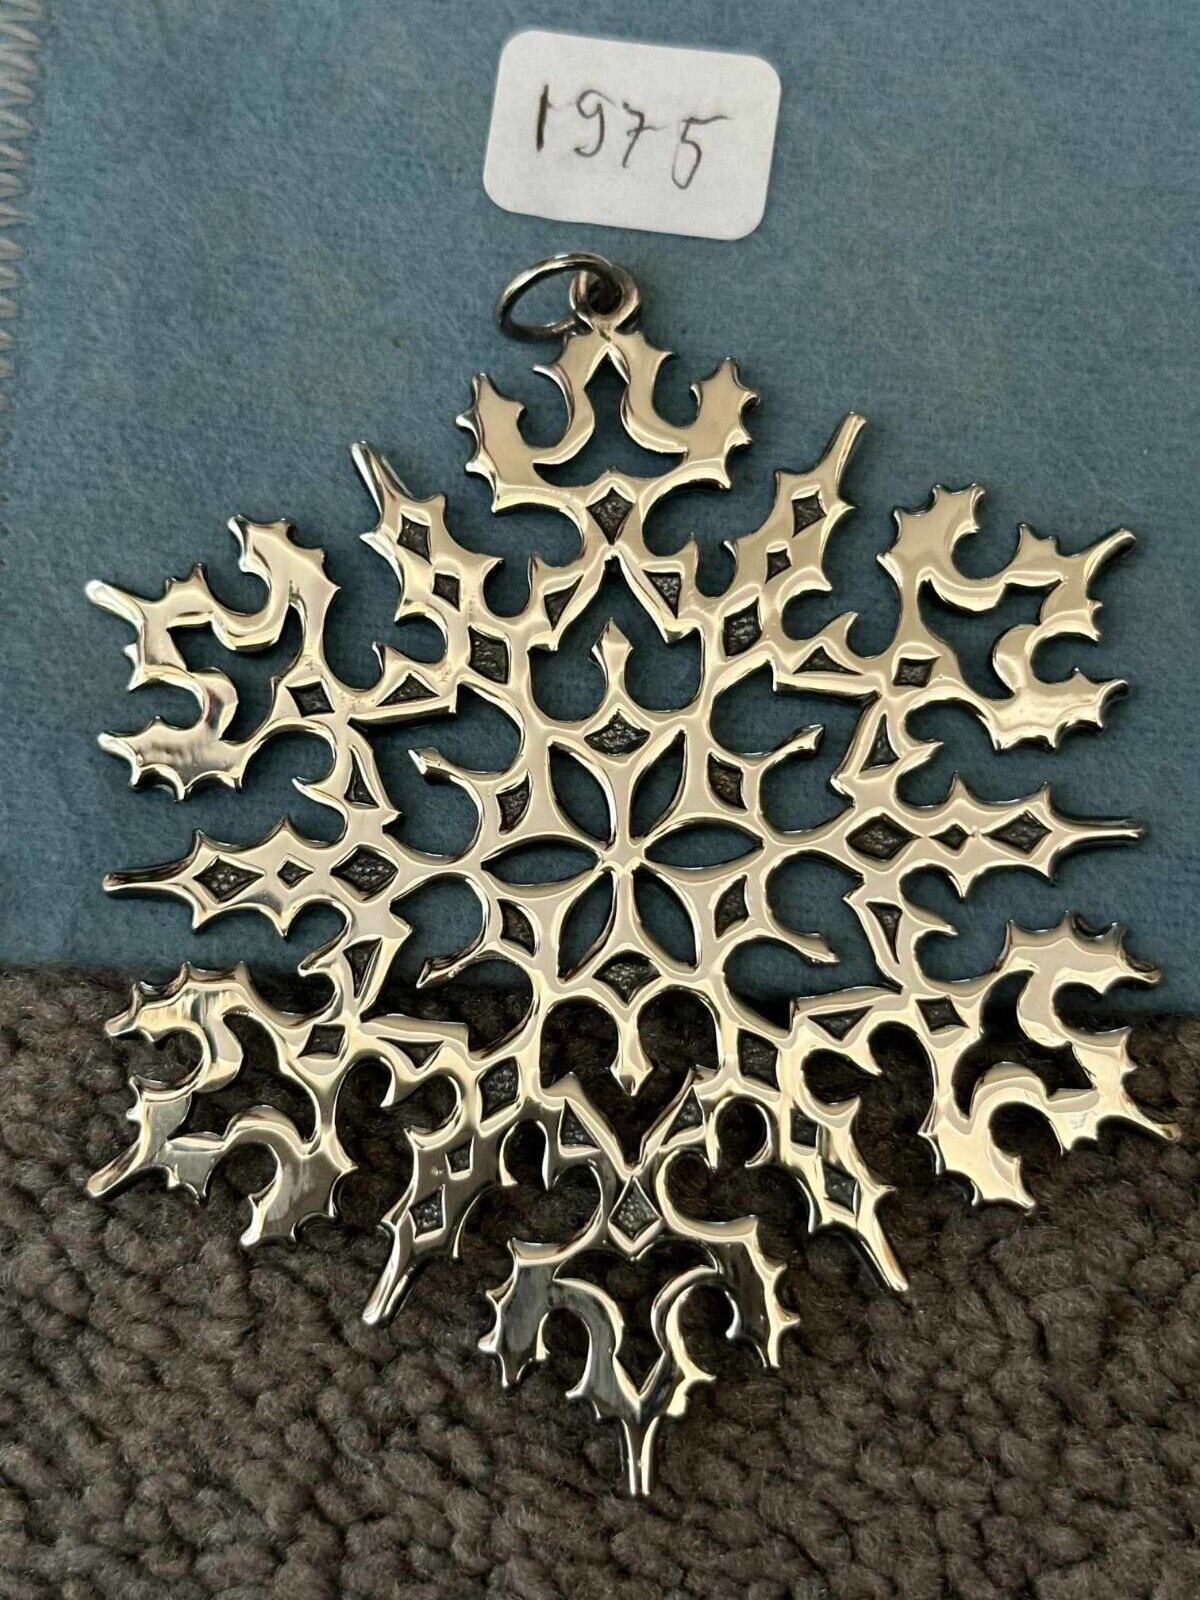 Metropolitan Museum of Art (MMA) Silverplate Ornaments Snowflakes, 1975-1997